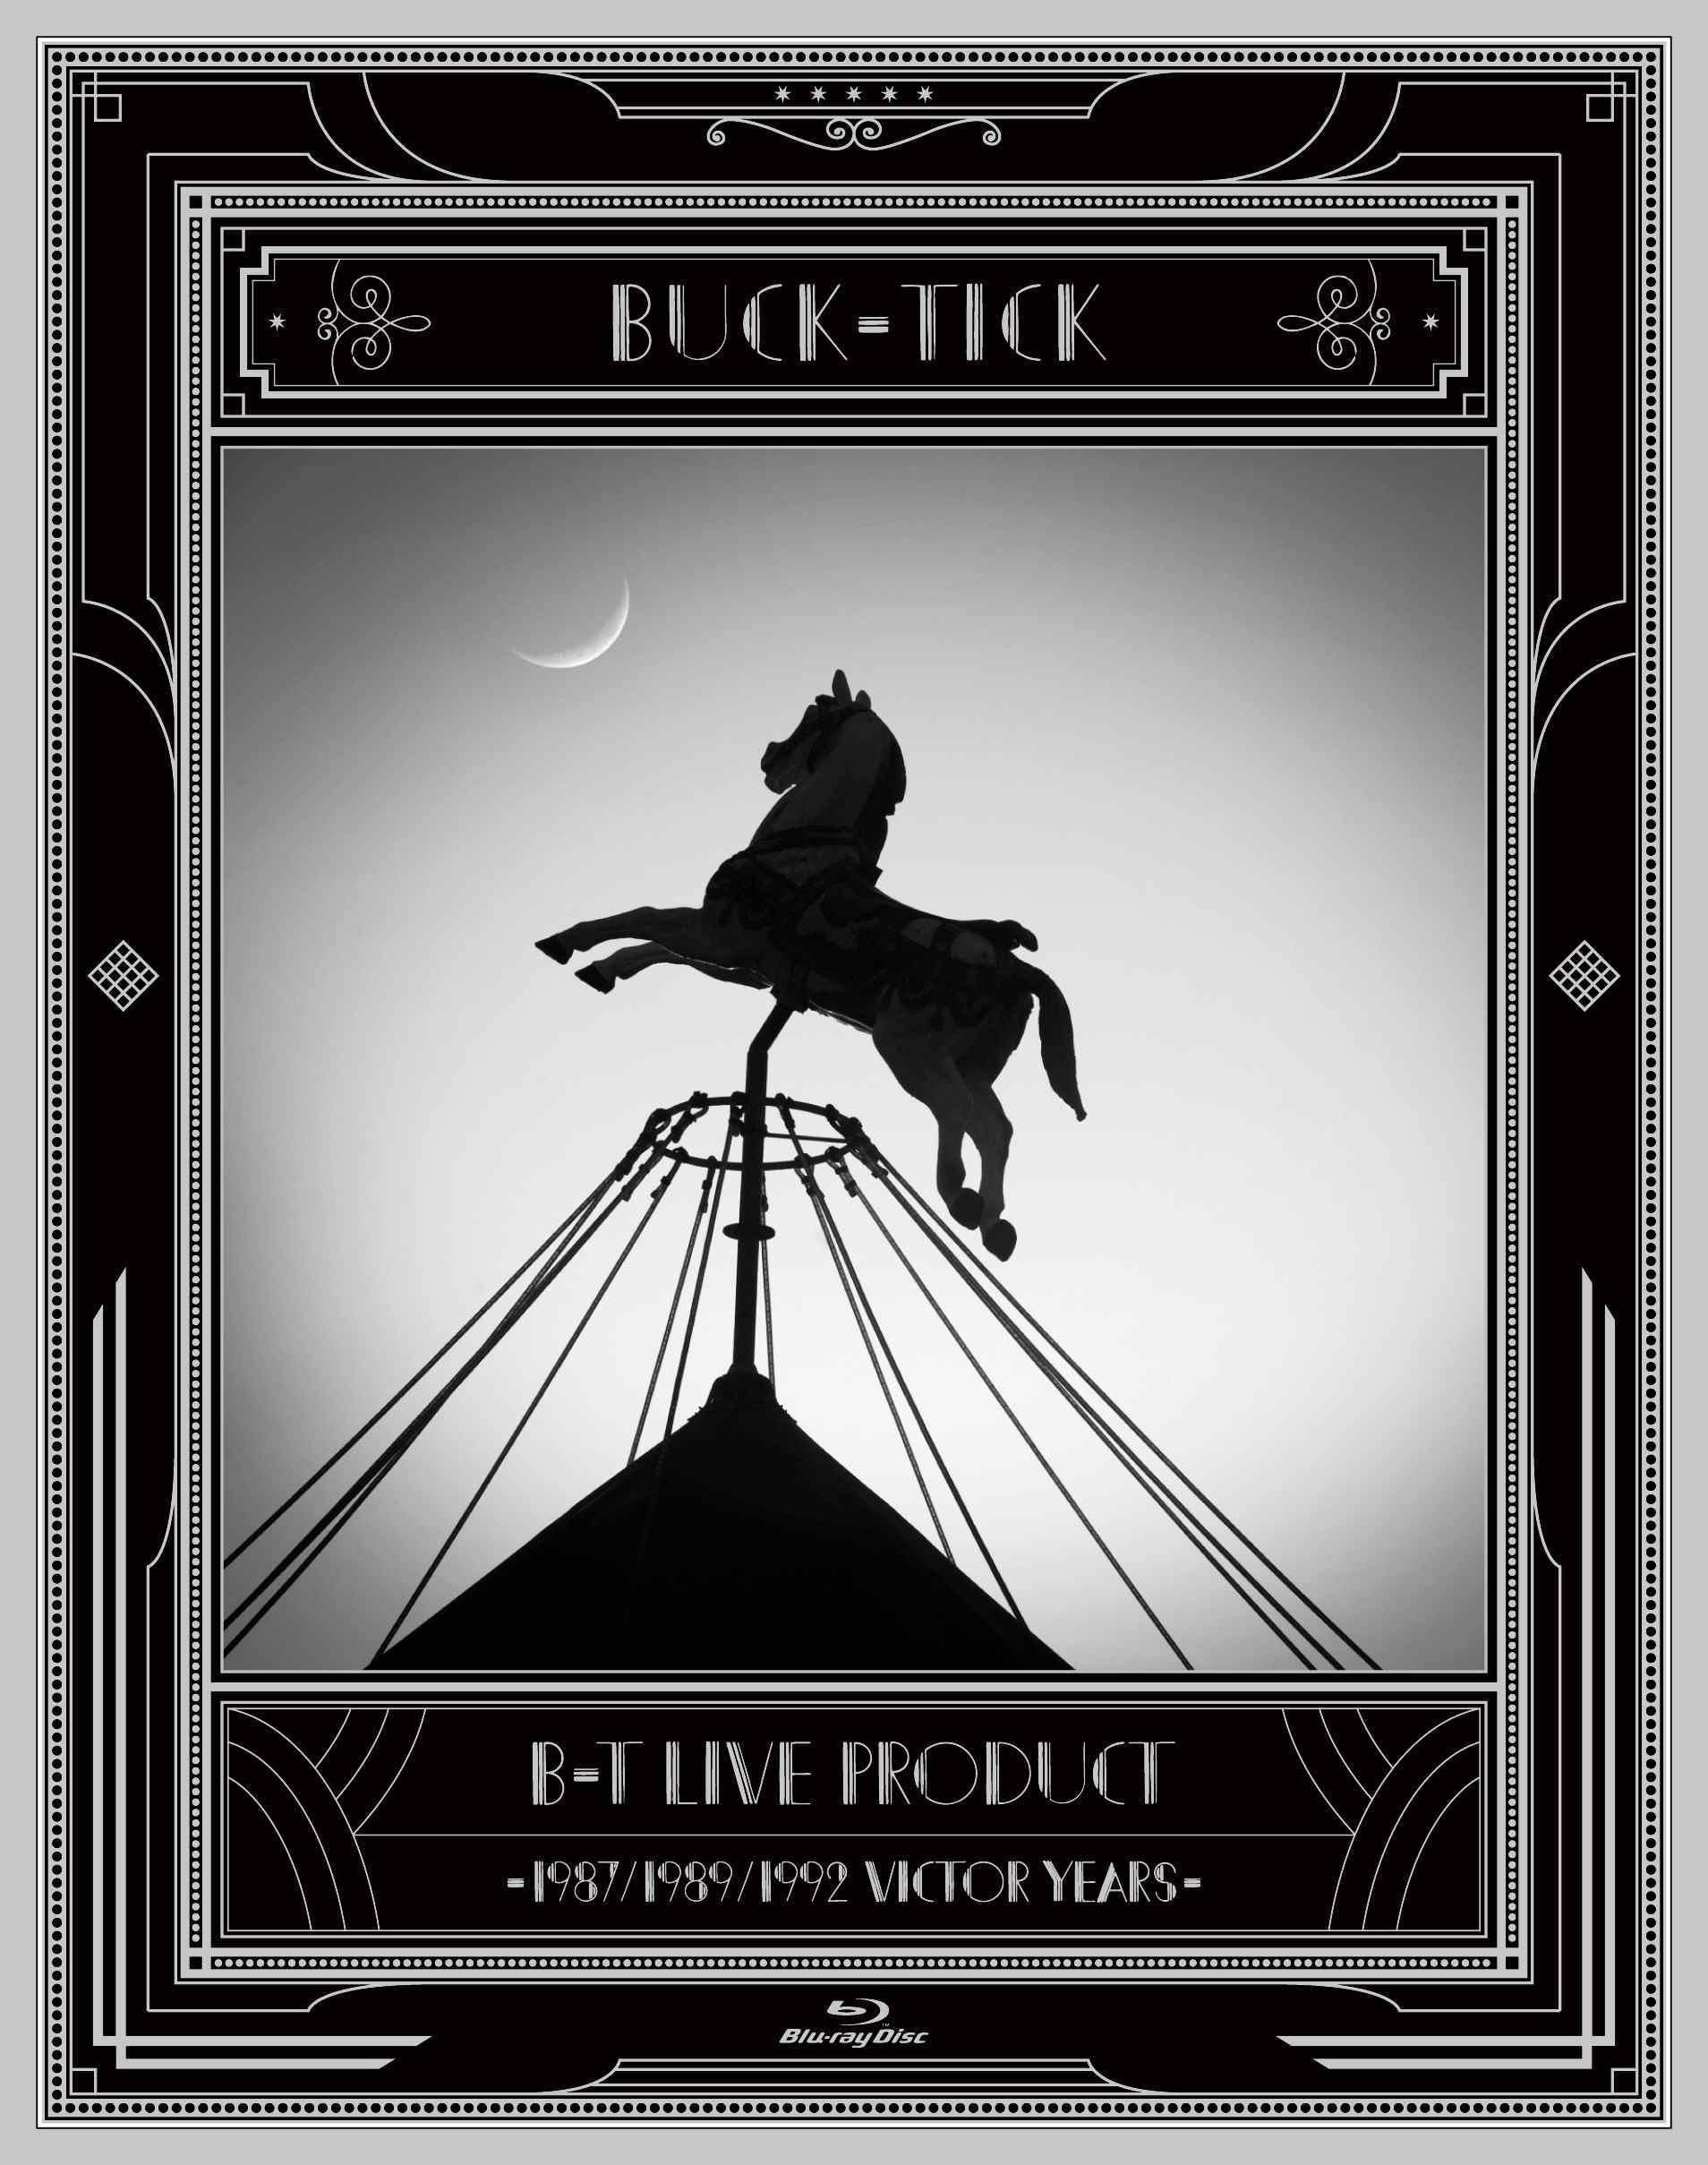 市場 BD BUCK-TICK at Blu-ray night the side